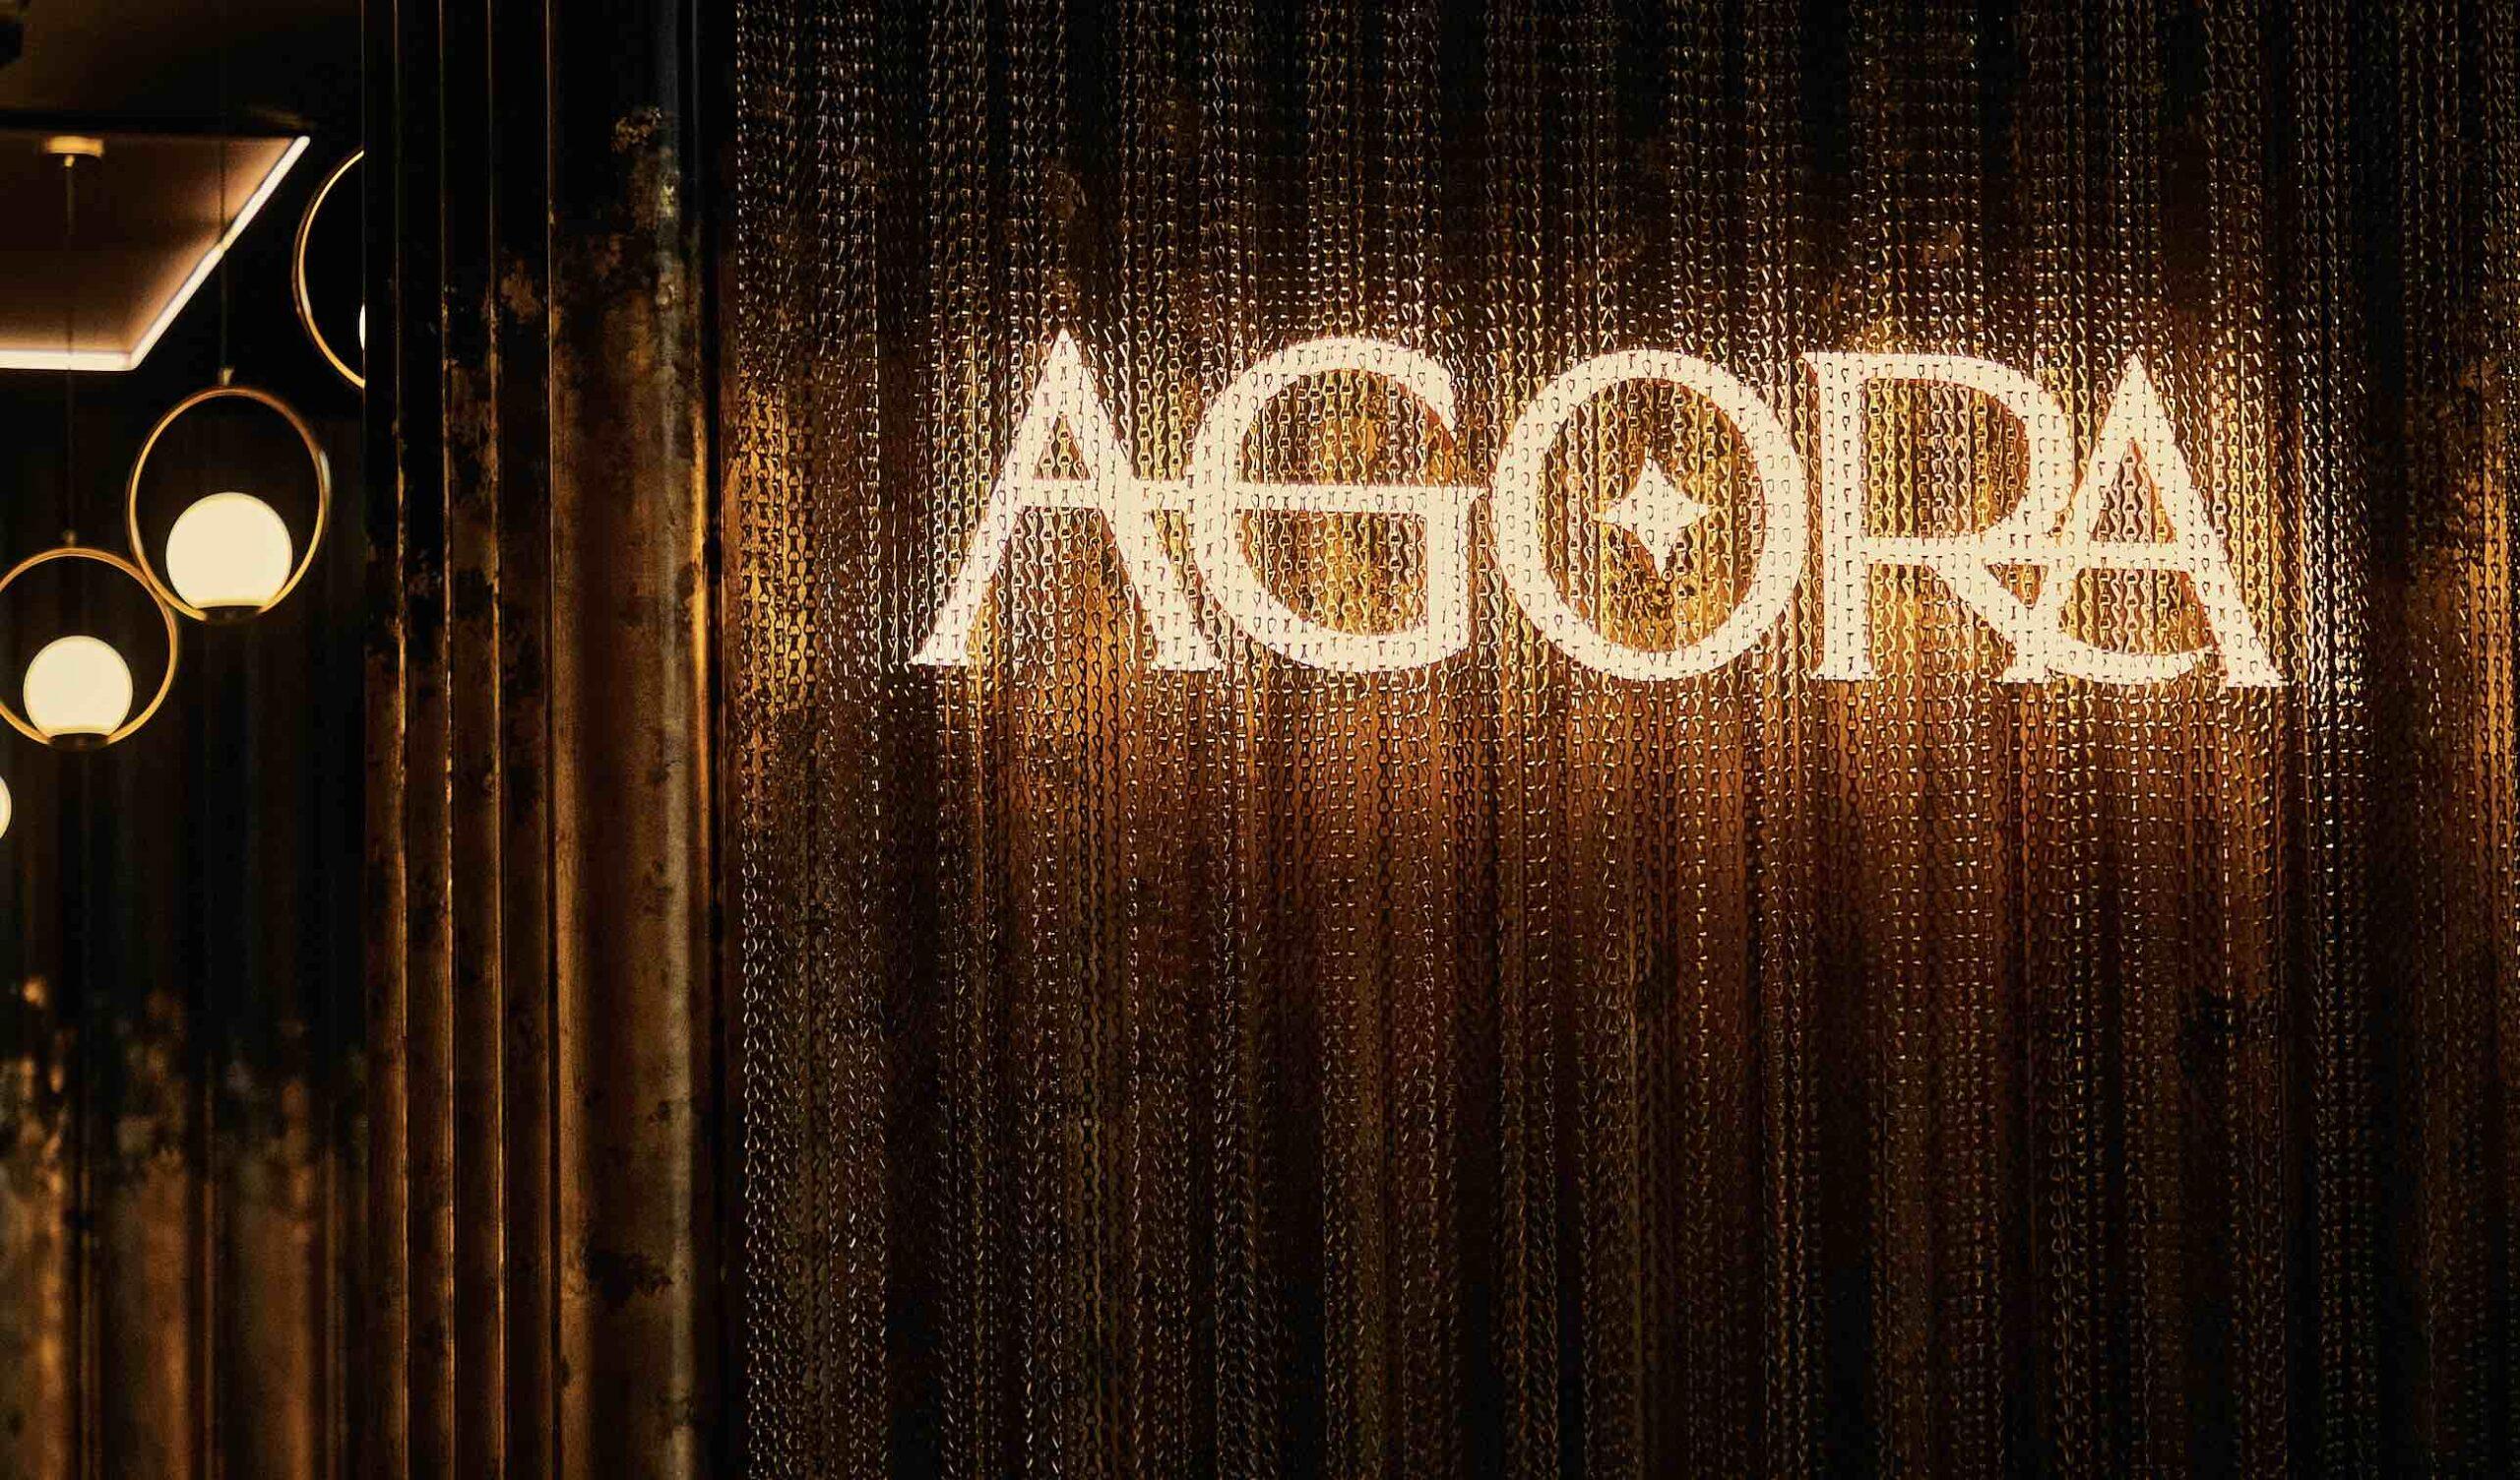 AGORA cocktail bar has debuted at The Dubai EDITION